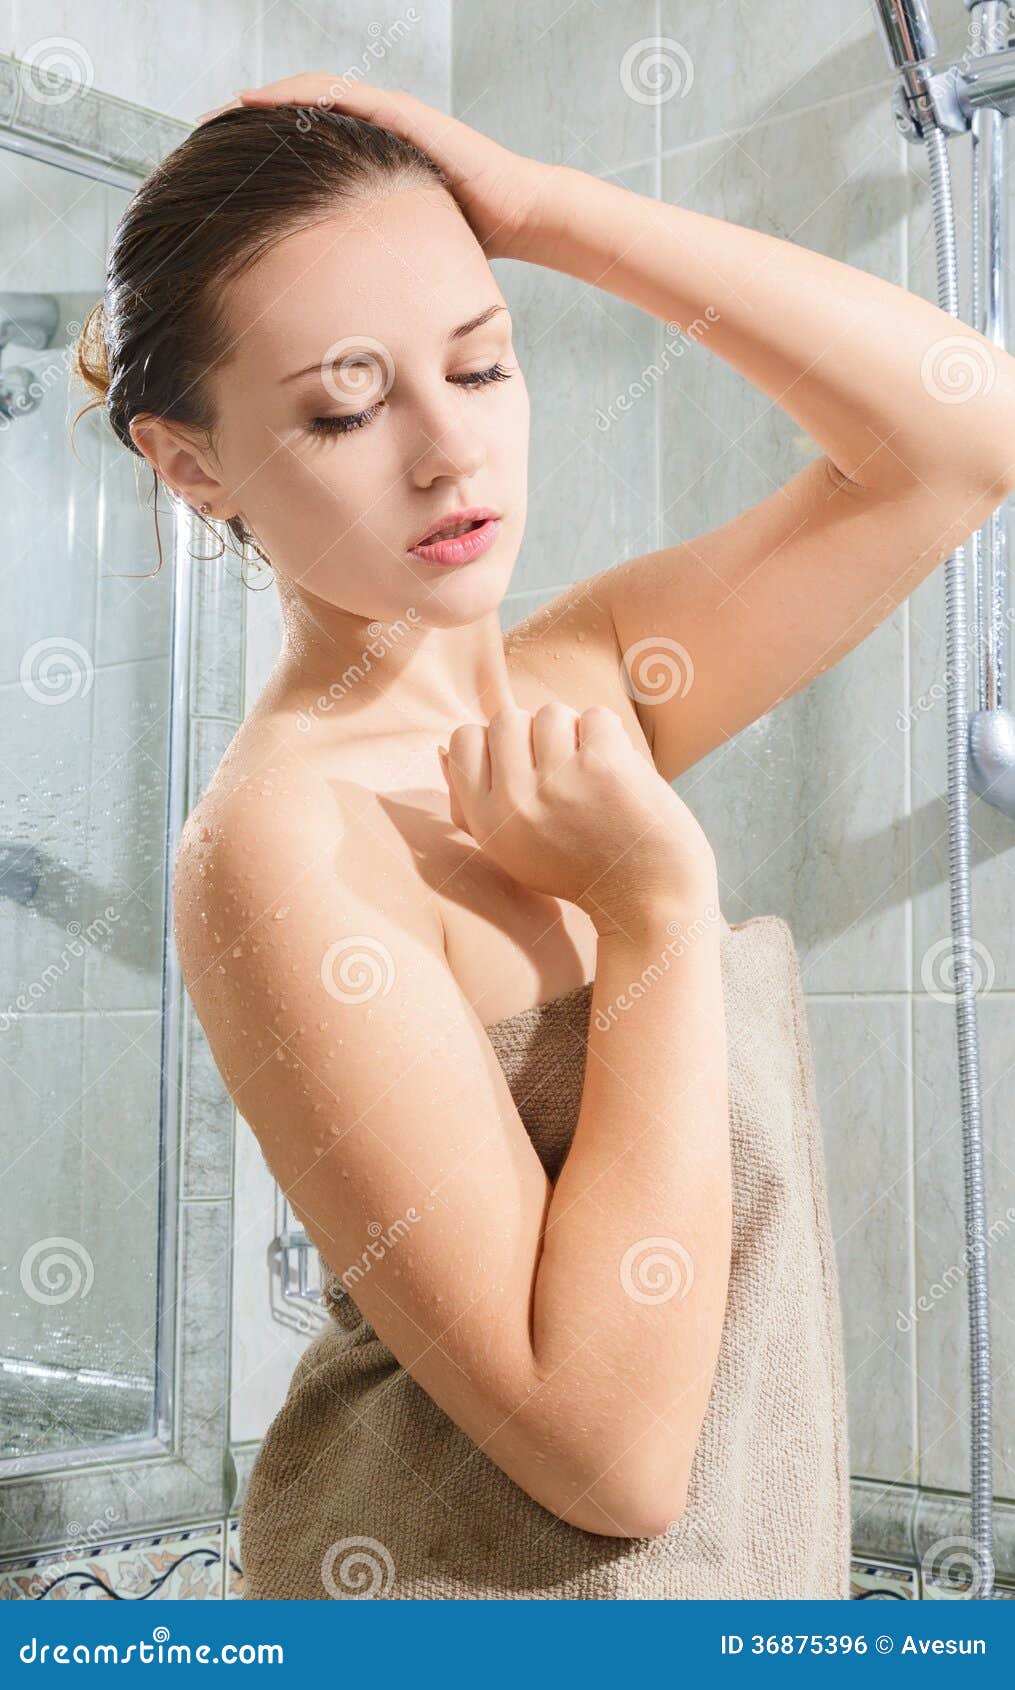 bikram chhetri recommends female taking a shower pic